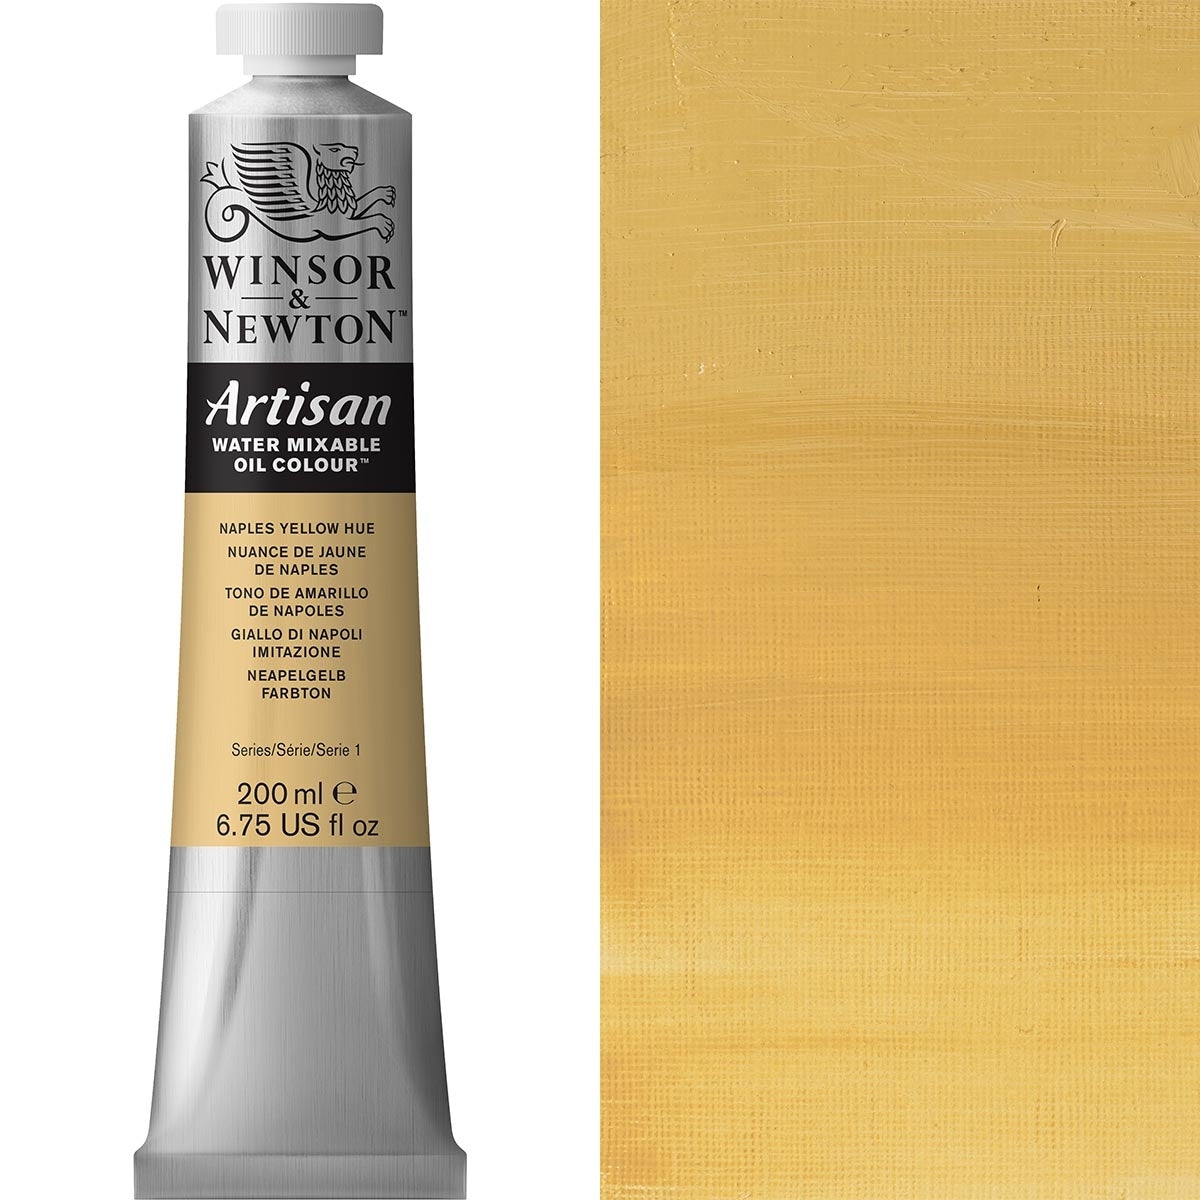 Winsor en Newton - Artisan Oil Color Water Mixable - 200 ml - Napels Yellow